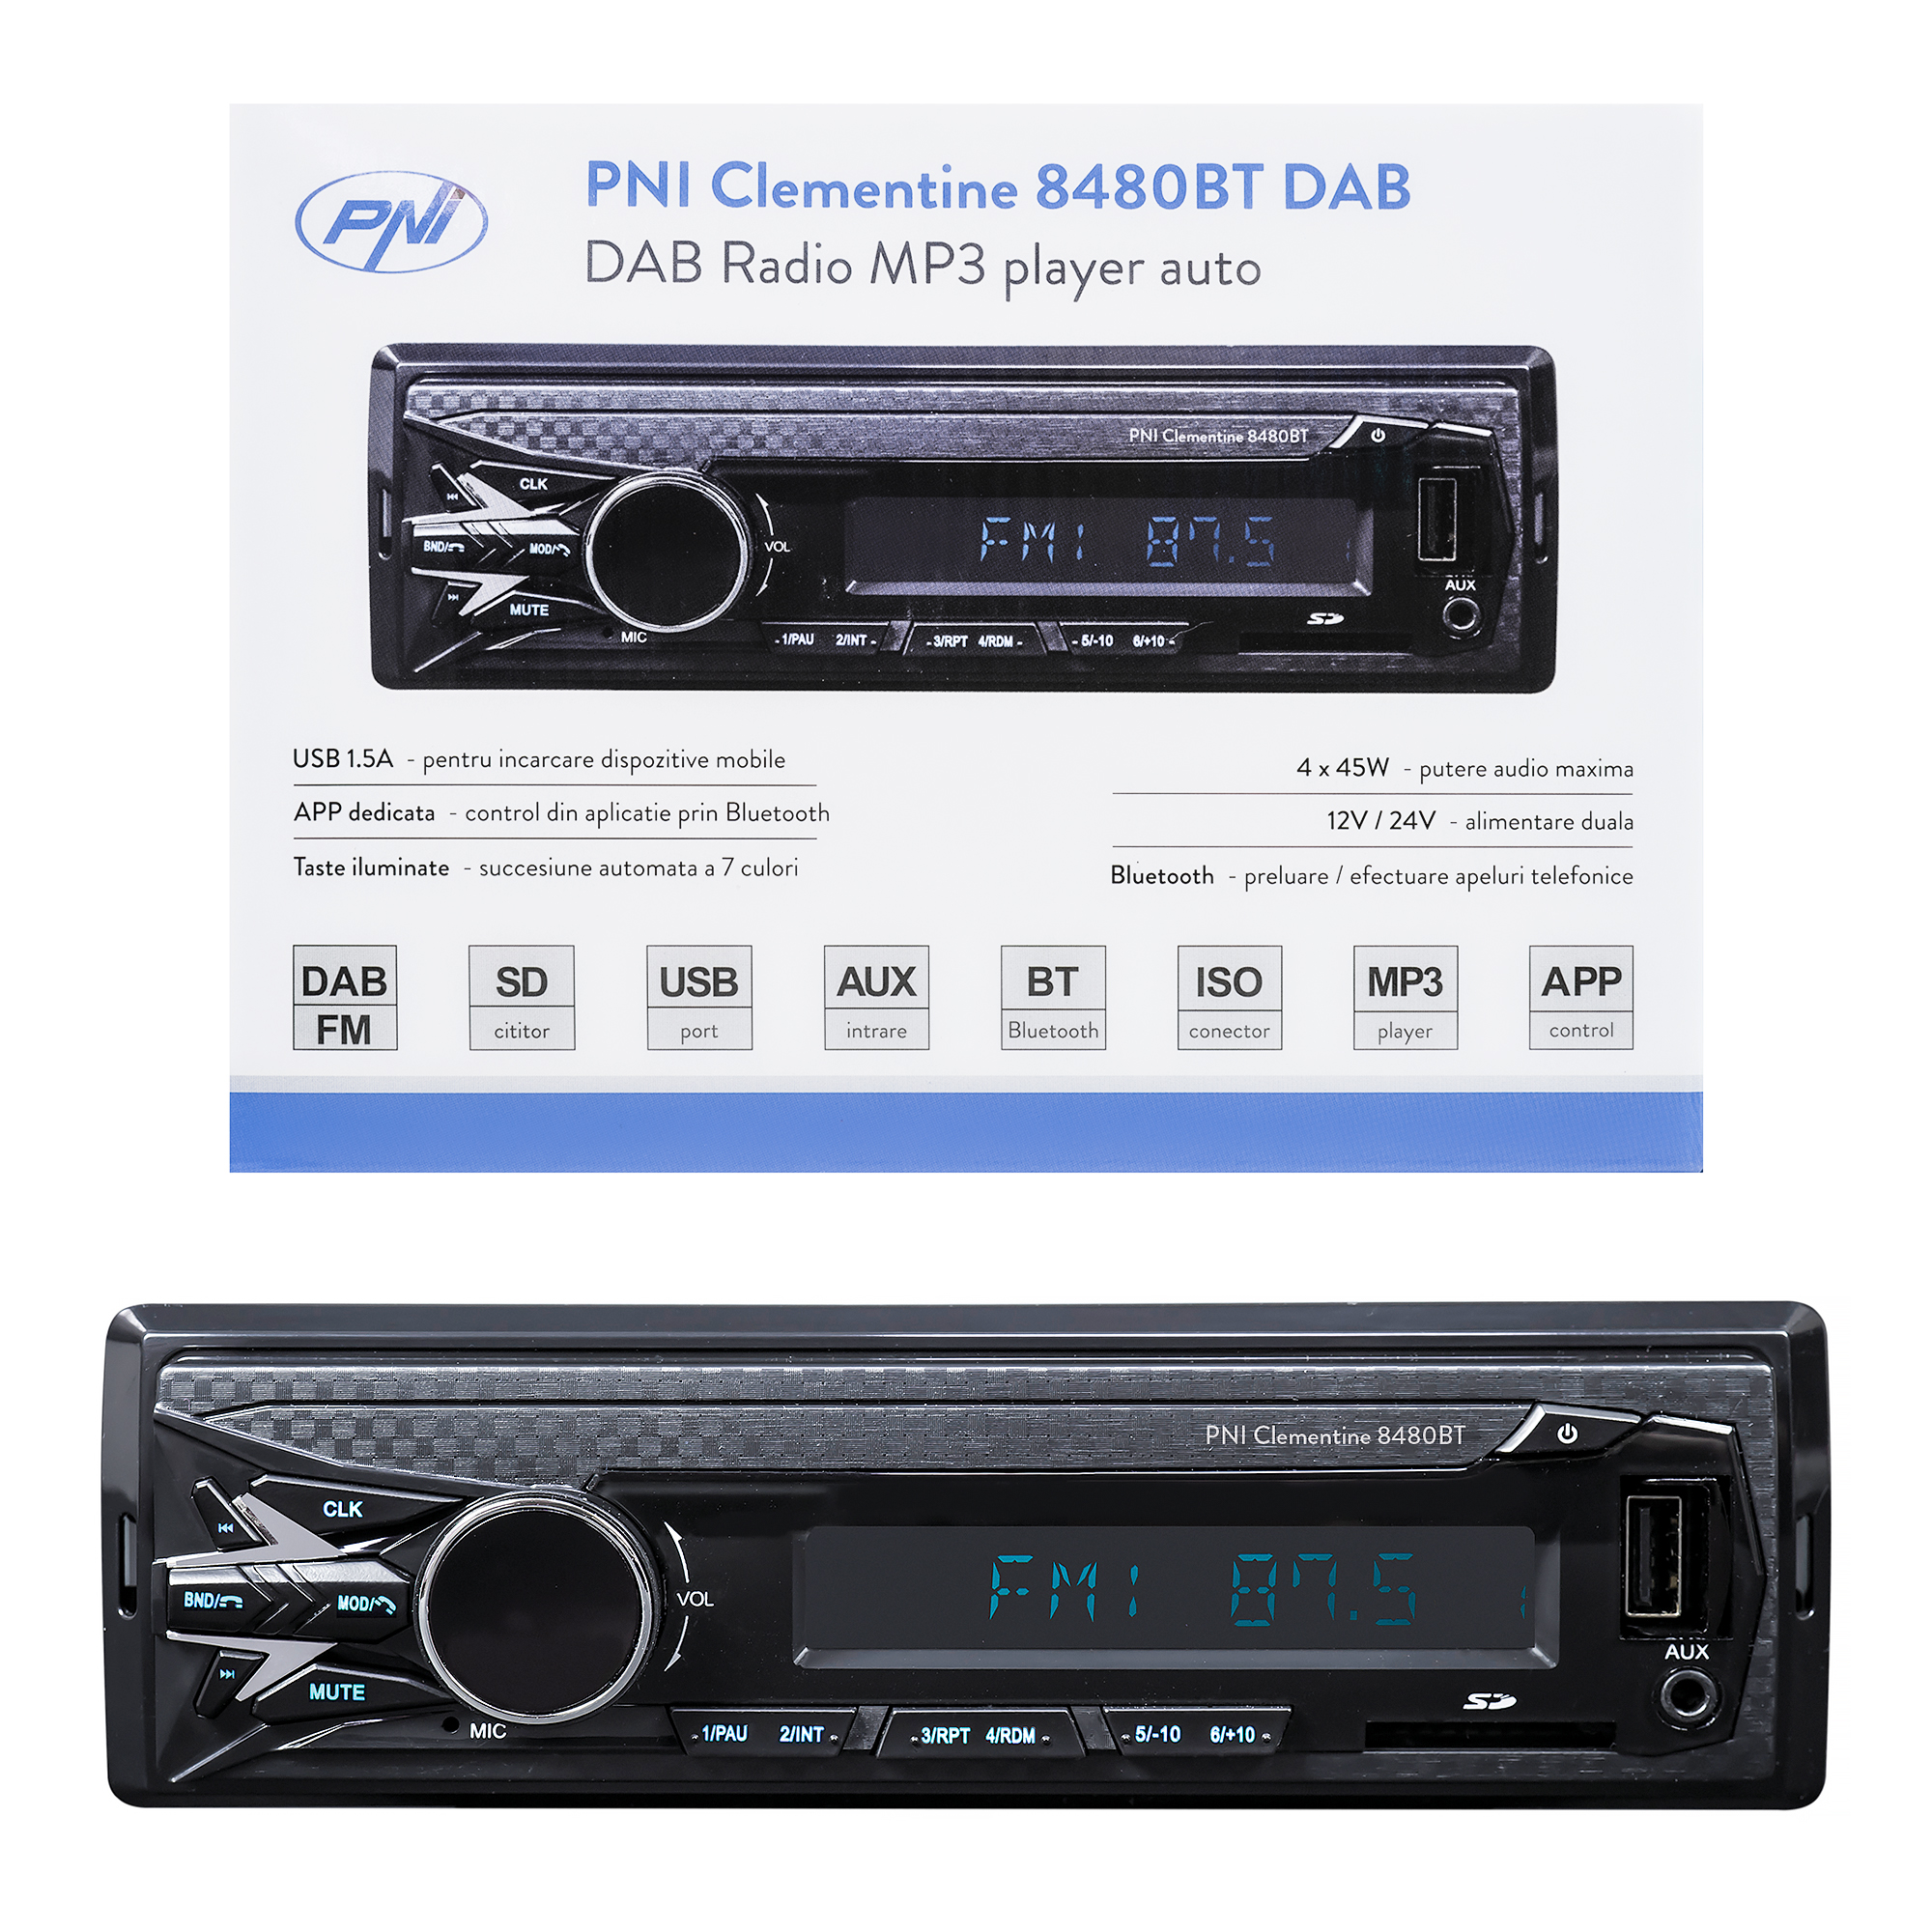 DAB Radio MP3 player auto PNI Clementine 8480BT 4x45w, 12/24V, 1 DIN, cu SD, USB, AUX, RCA, Bluetooth si USB 1.5A pentru incarcare telefon